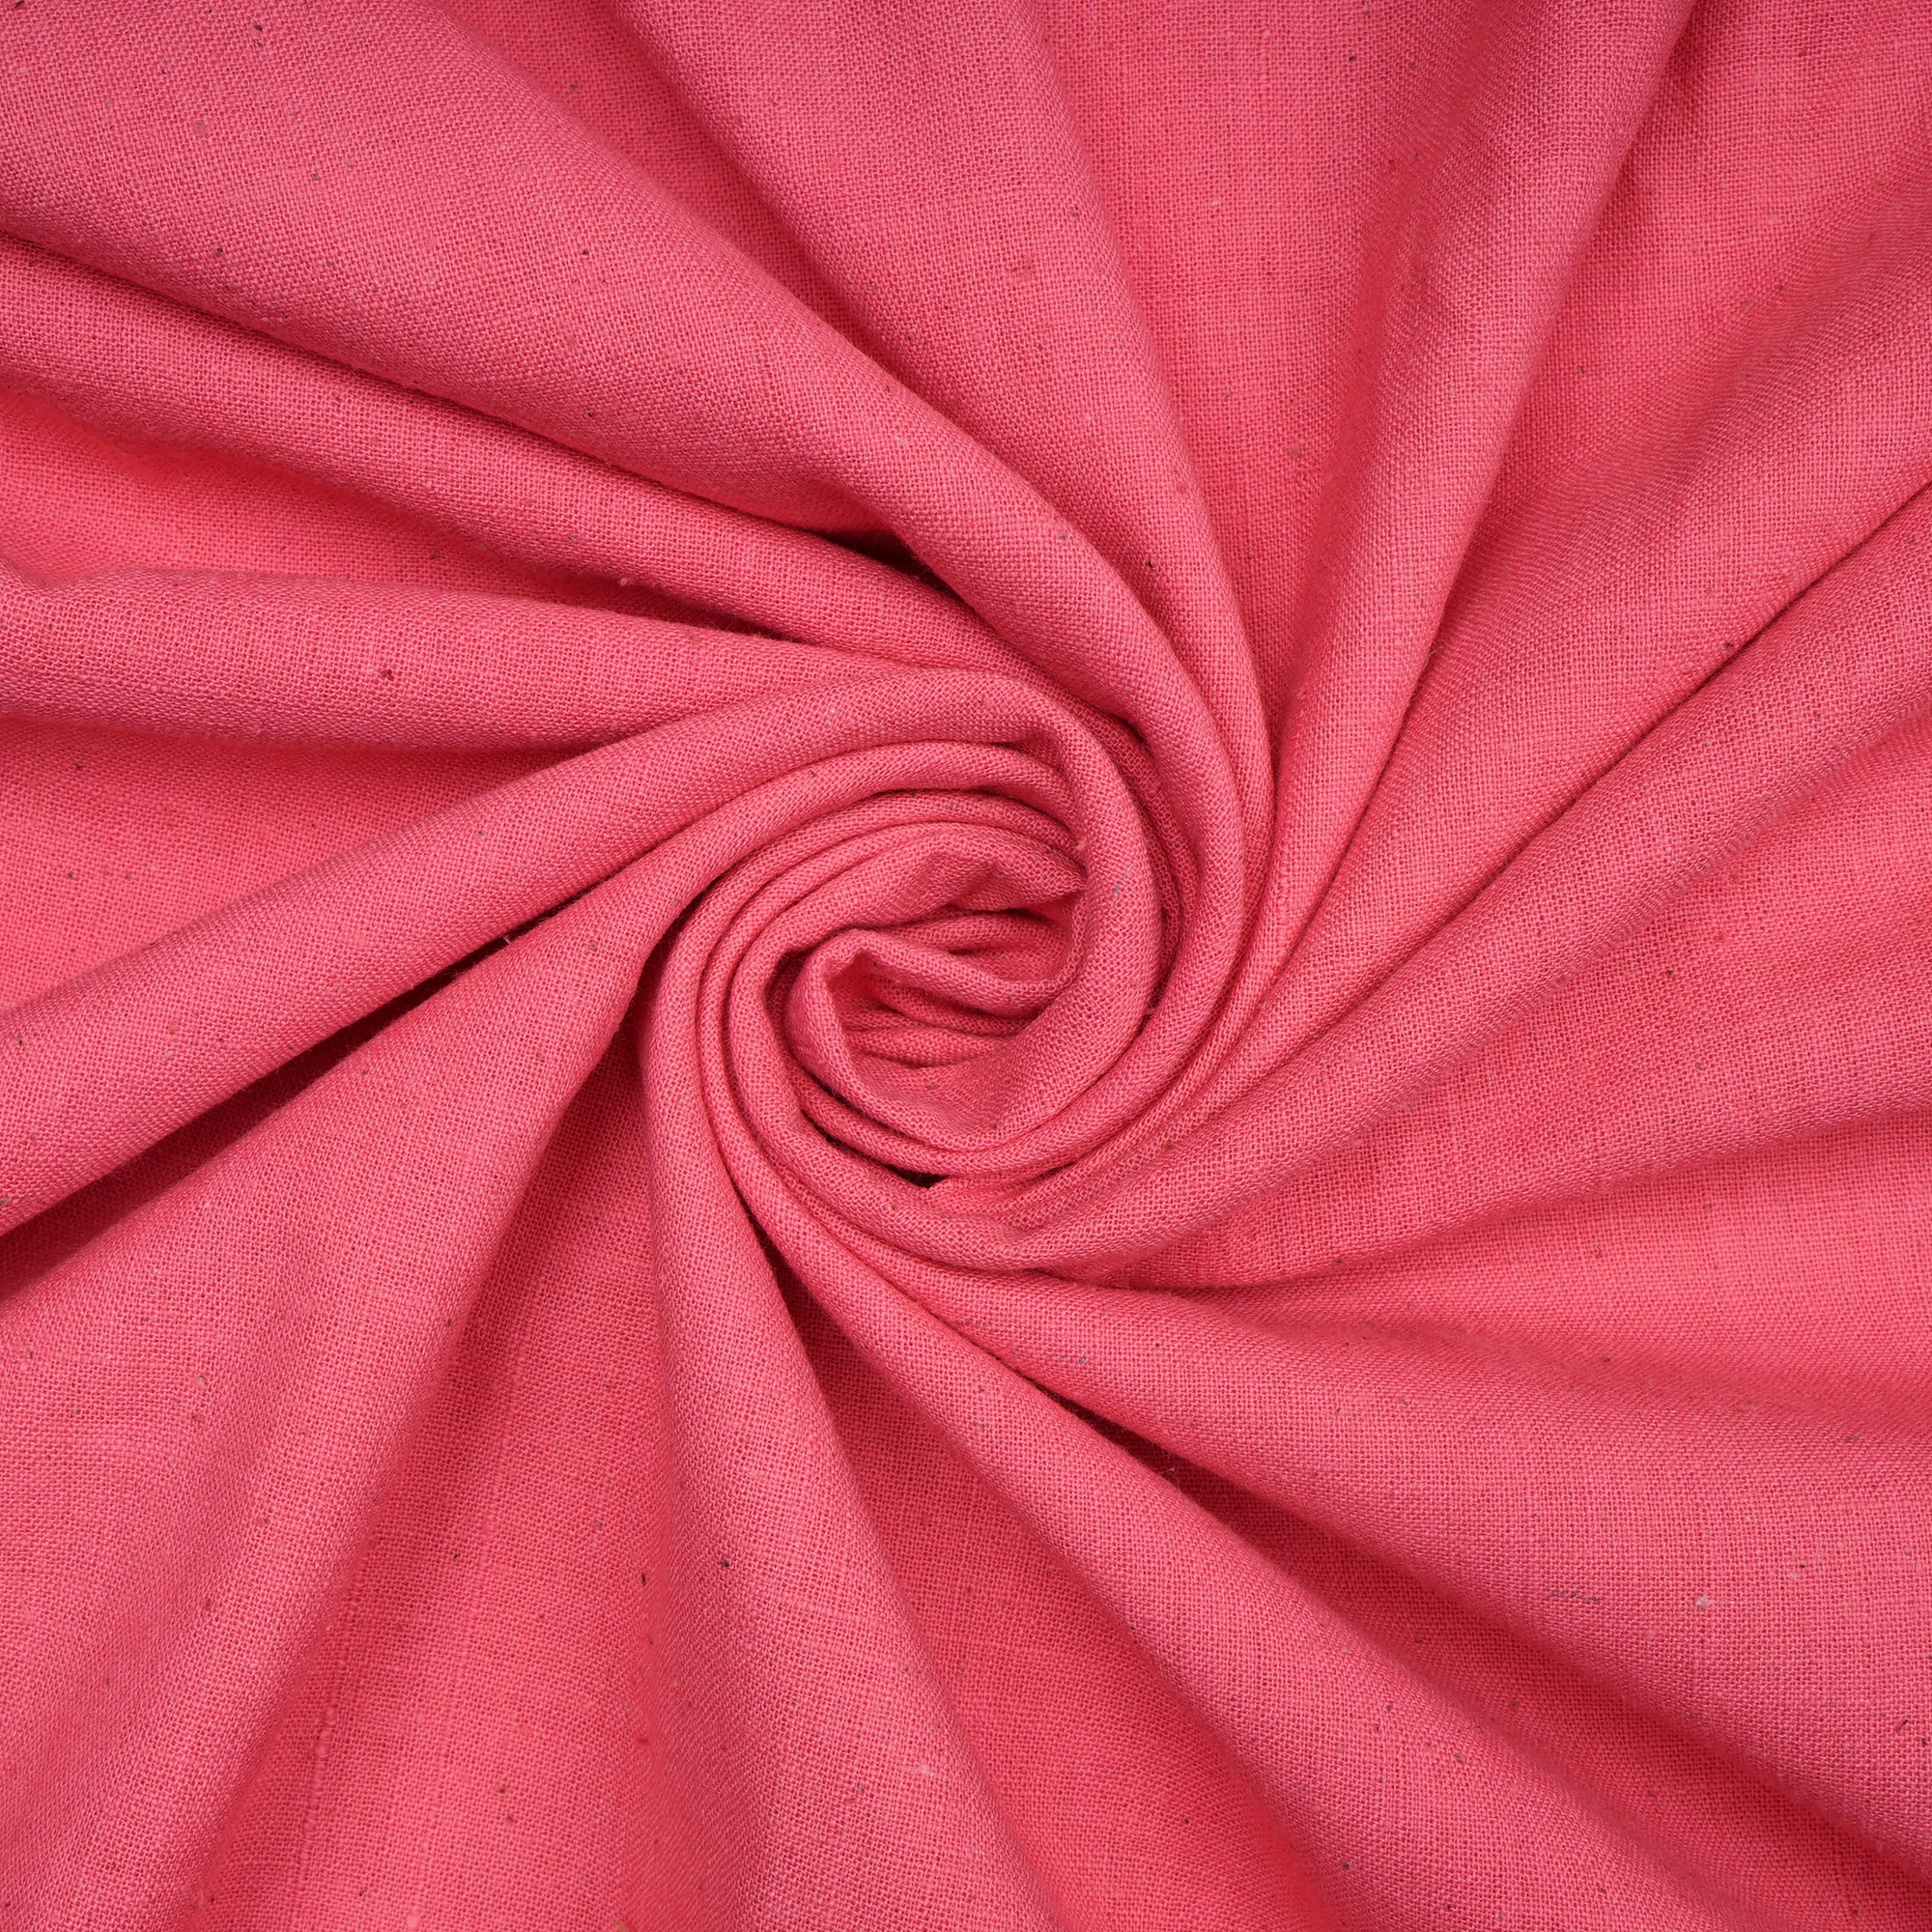 Camellia Rose 40's Count Piece Dyed Handspun Handwoven Cotton Fabric